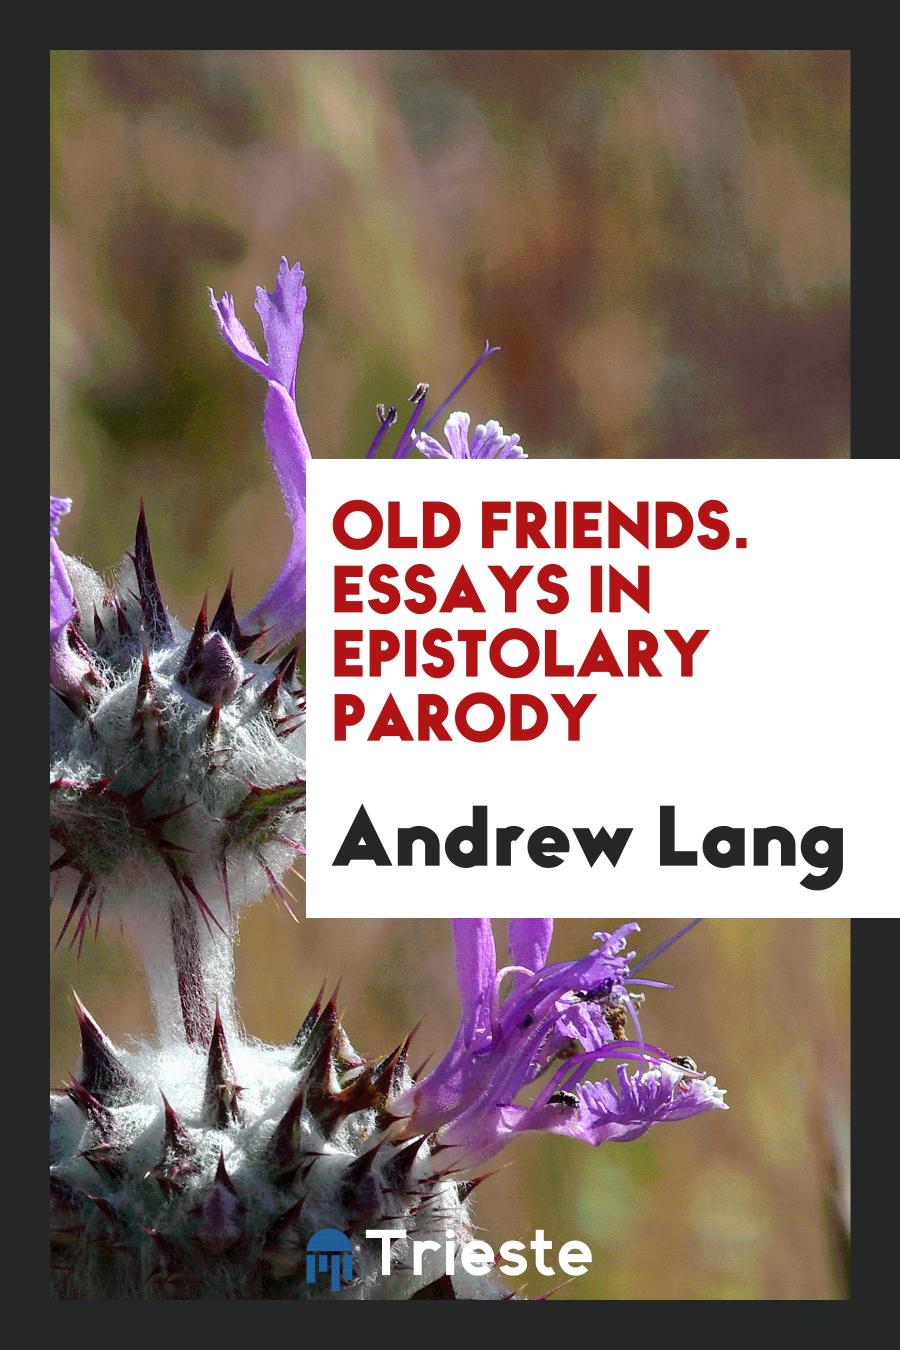 Old friends. Essays in epistolary parody